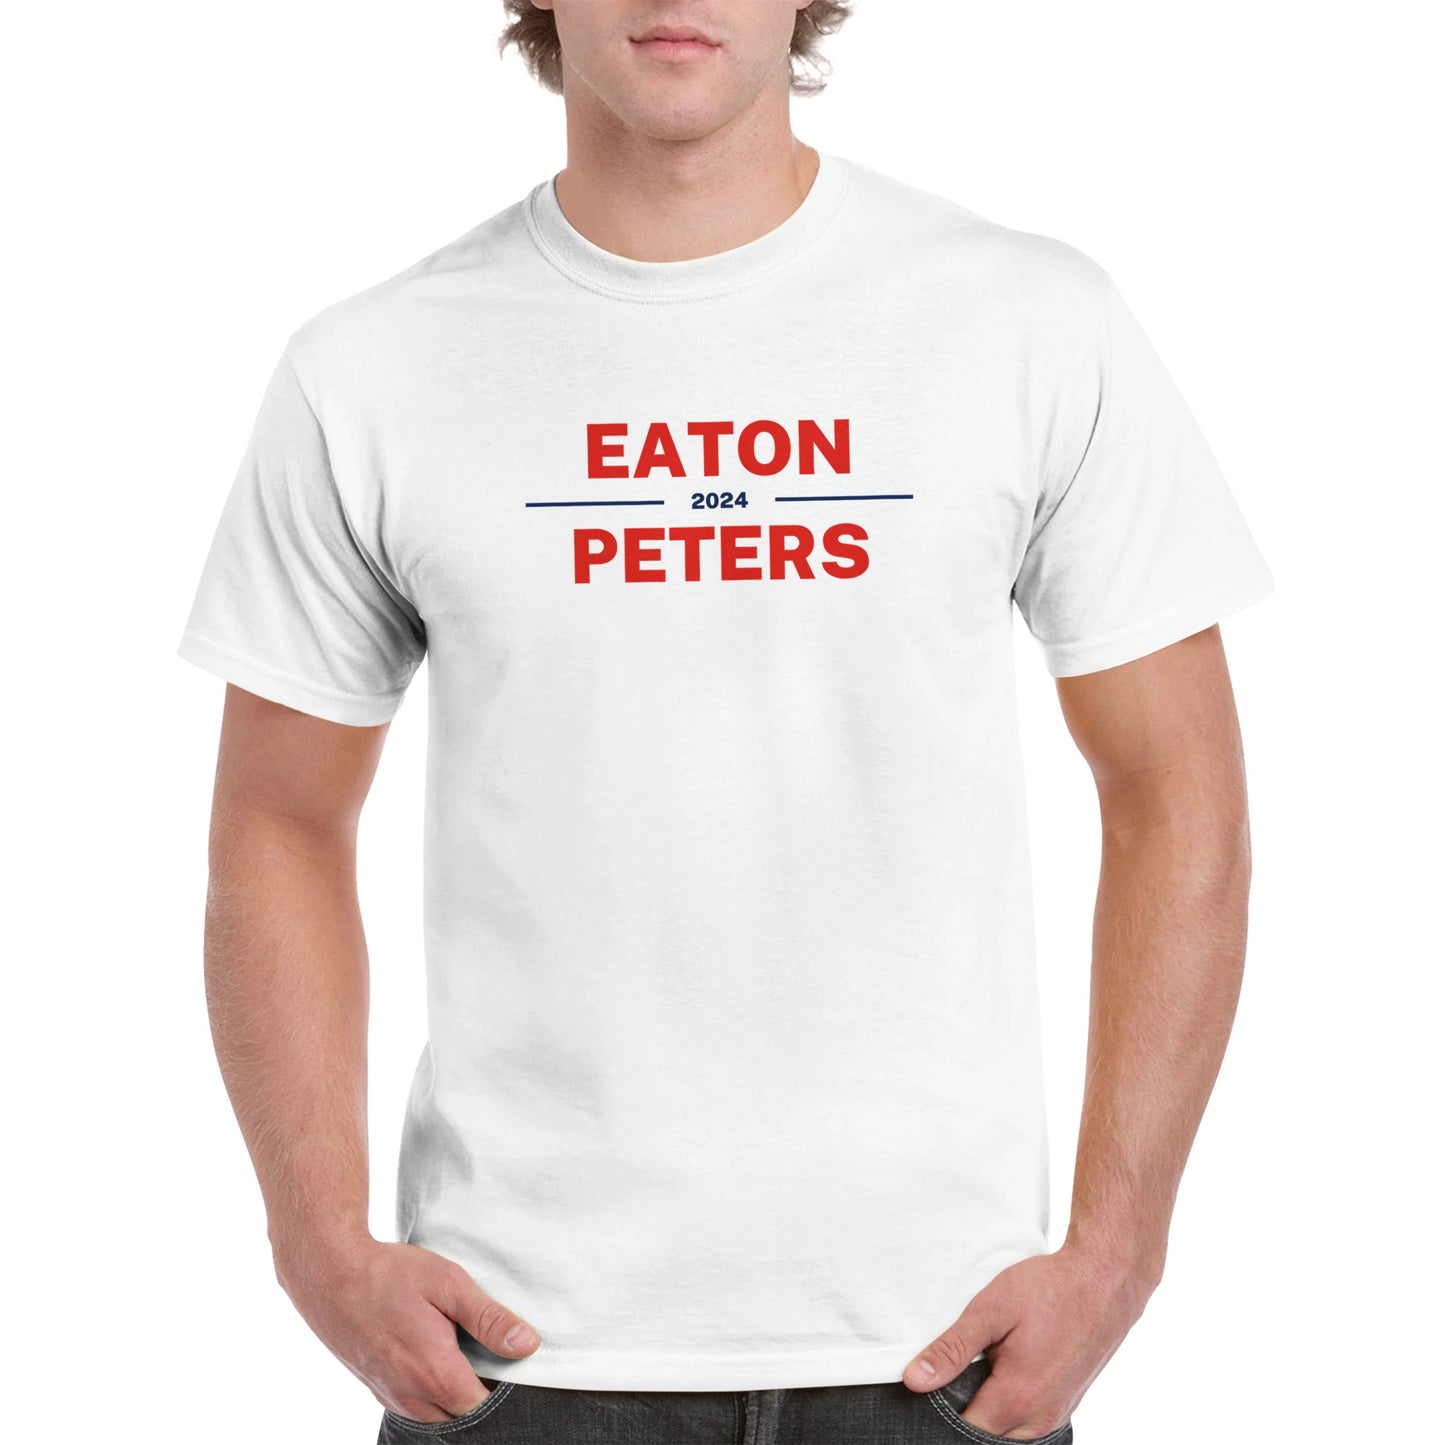 Eaton Peters 2024 Crewneck T-shirt